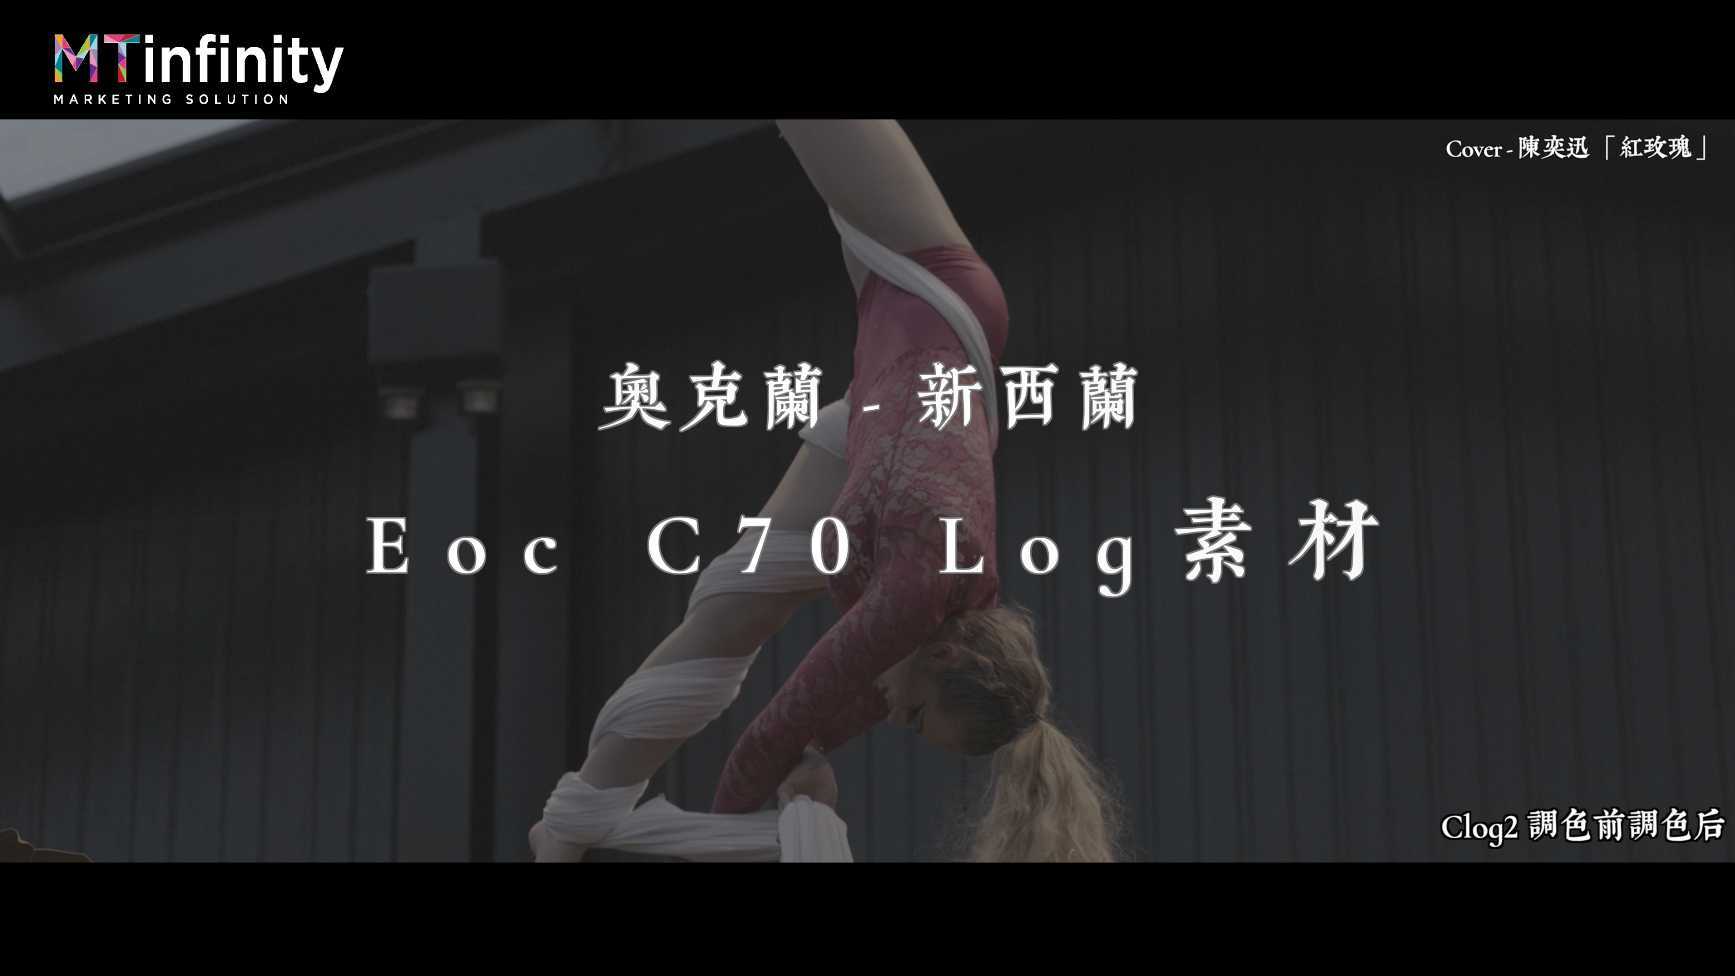 Eos C70 Clog 2 调色测试